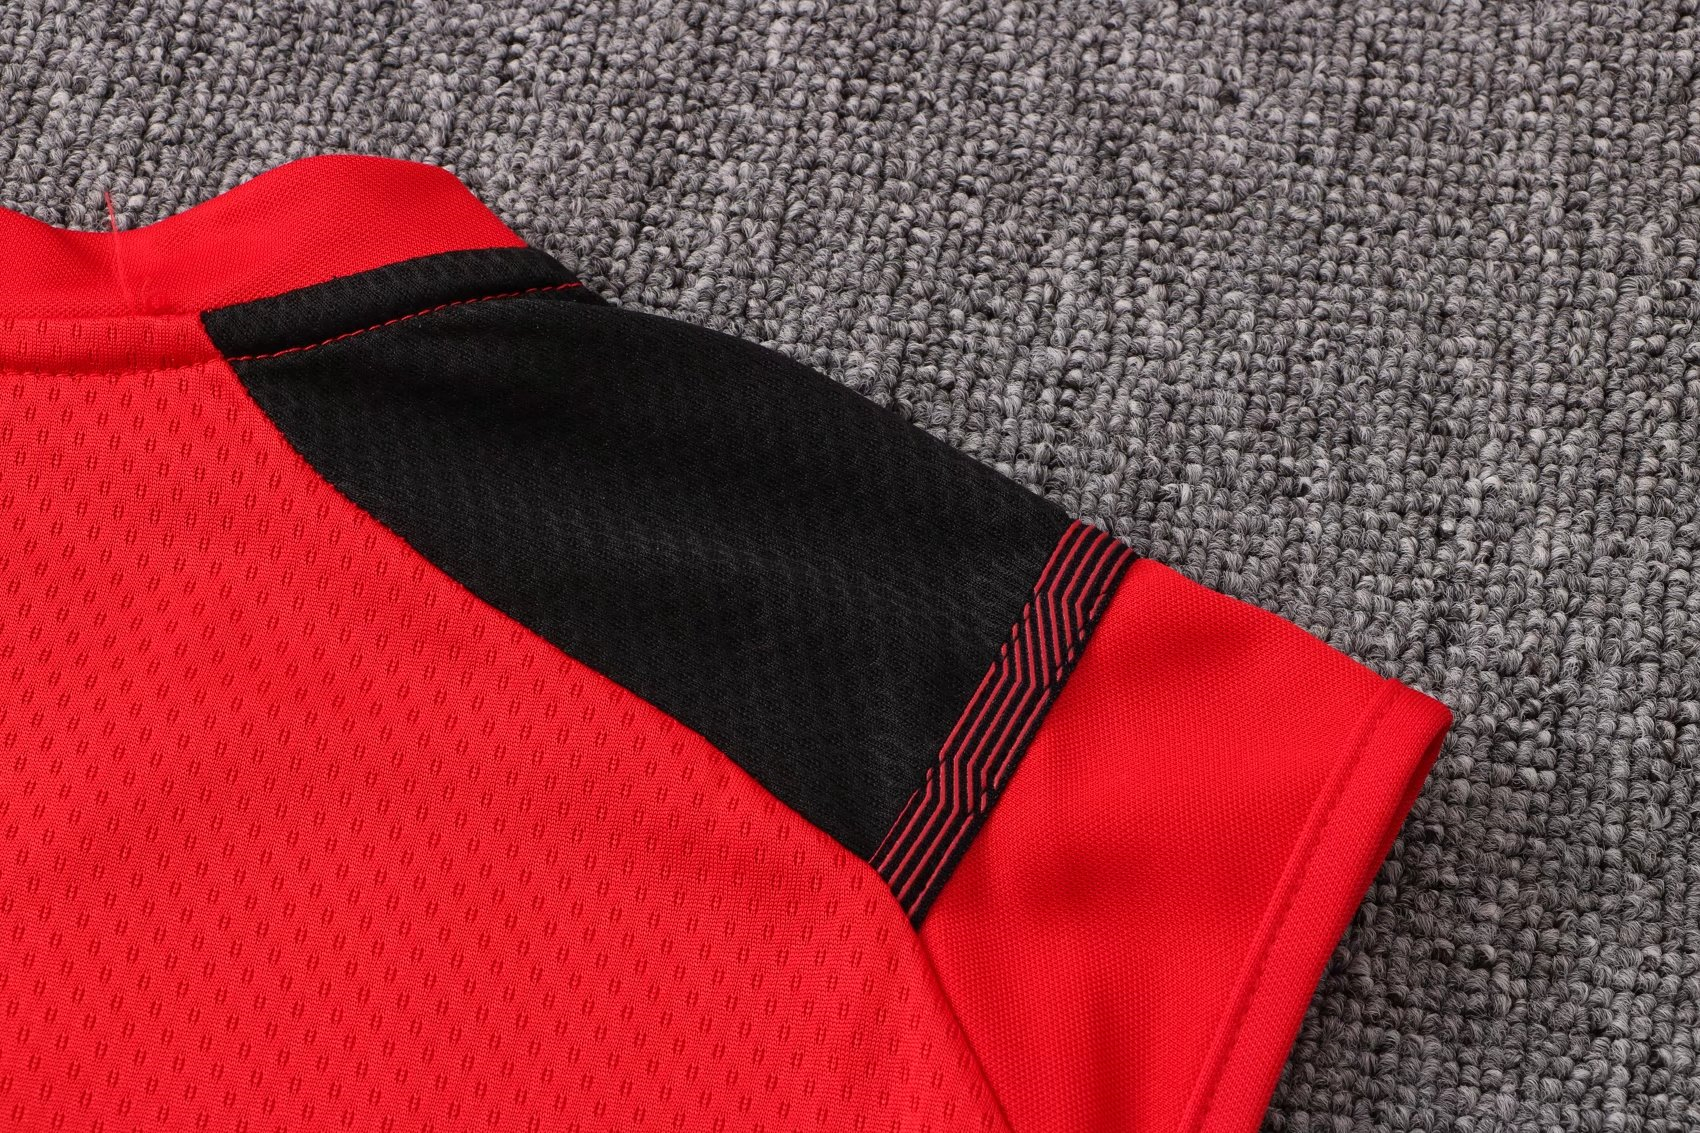 AC Milan Soccer Singlet Jersey Red Mens 2021/22